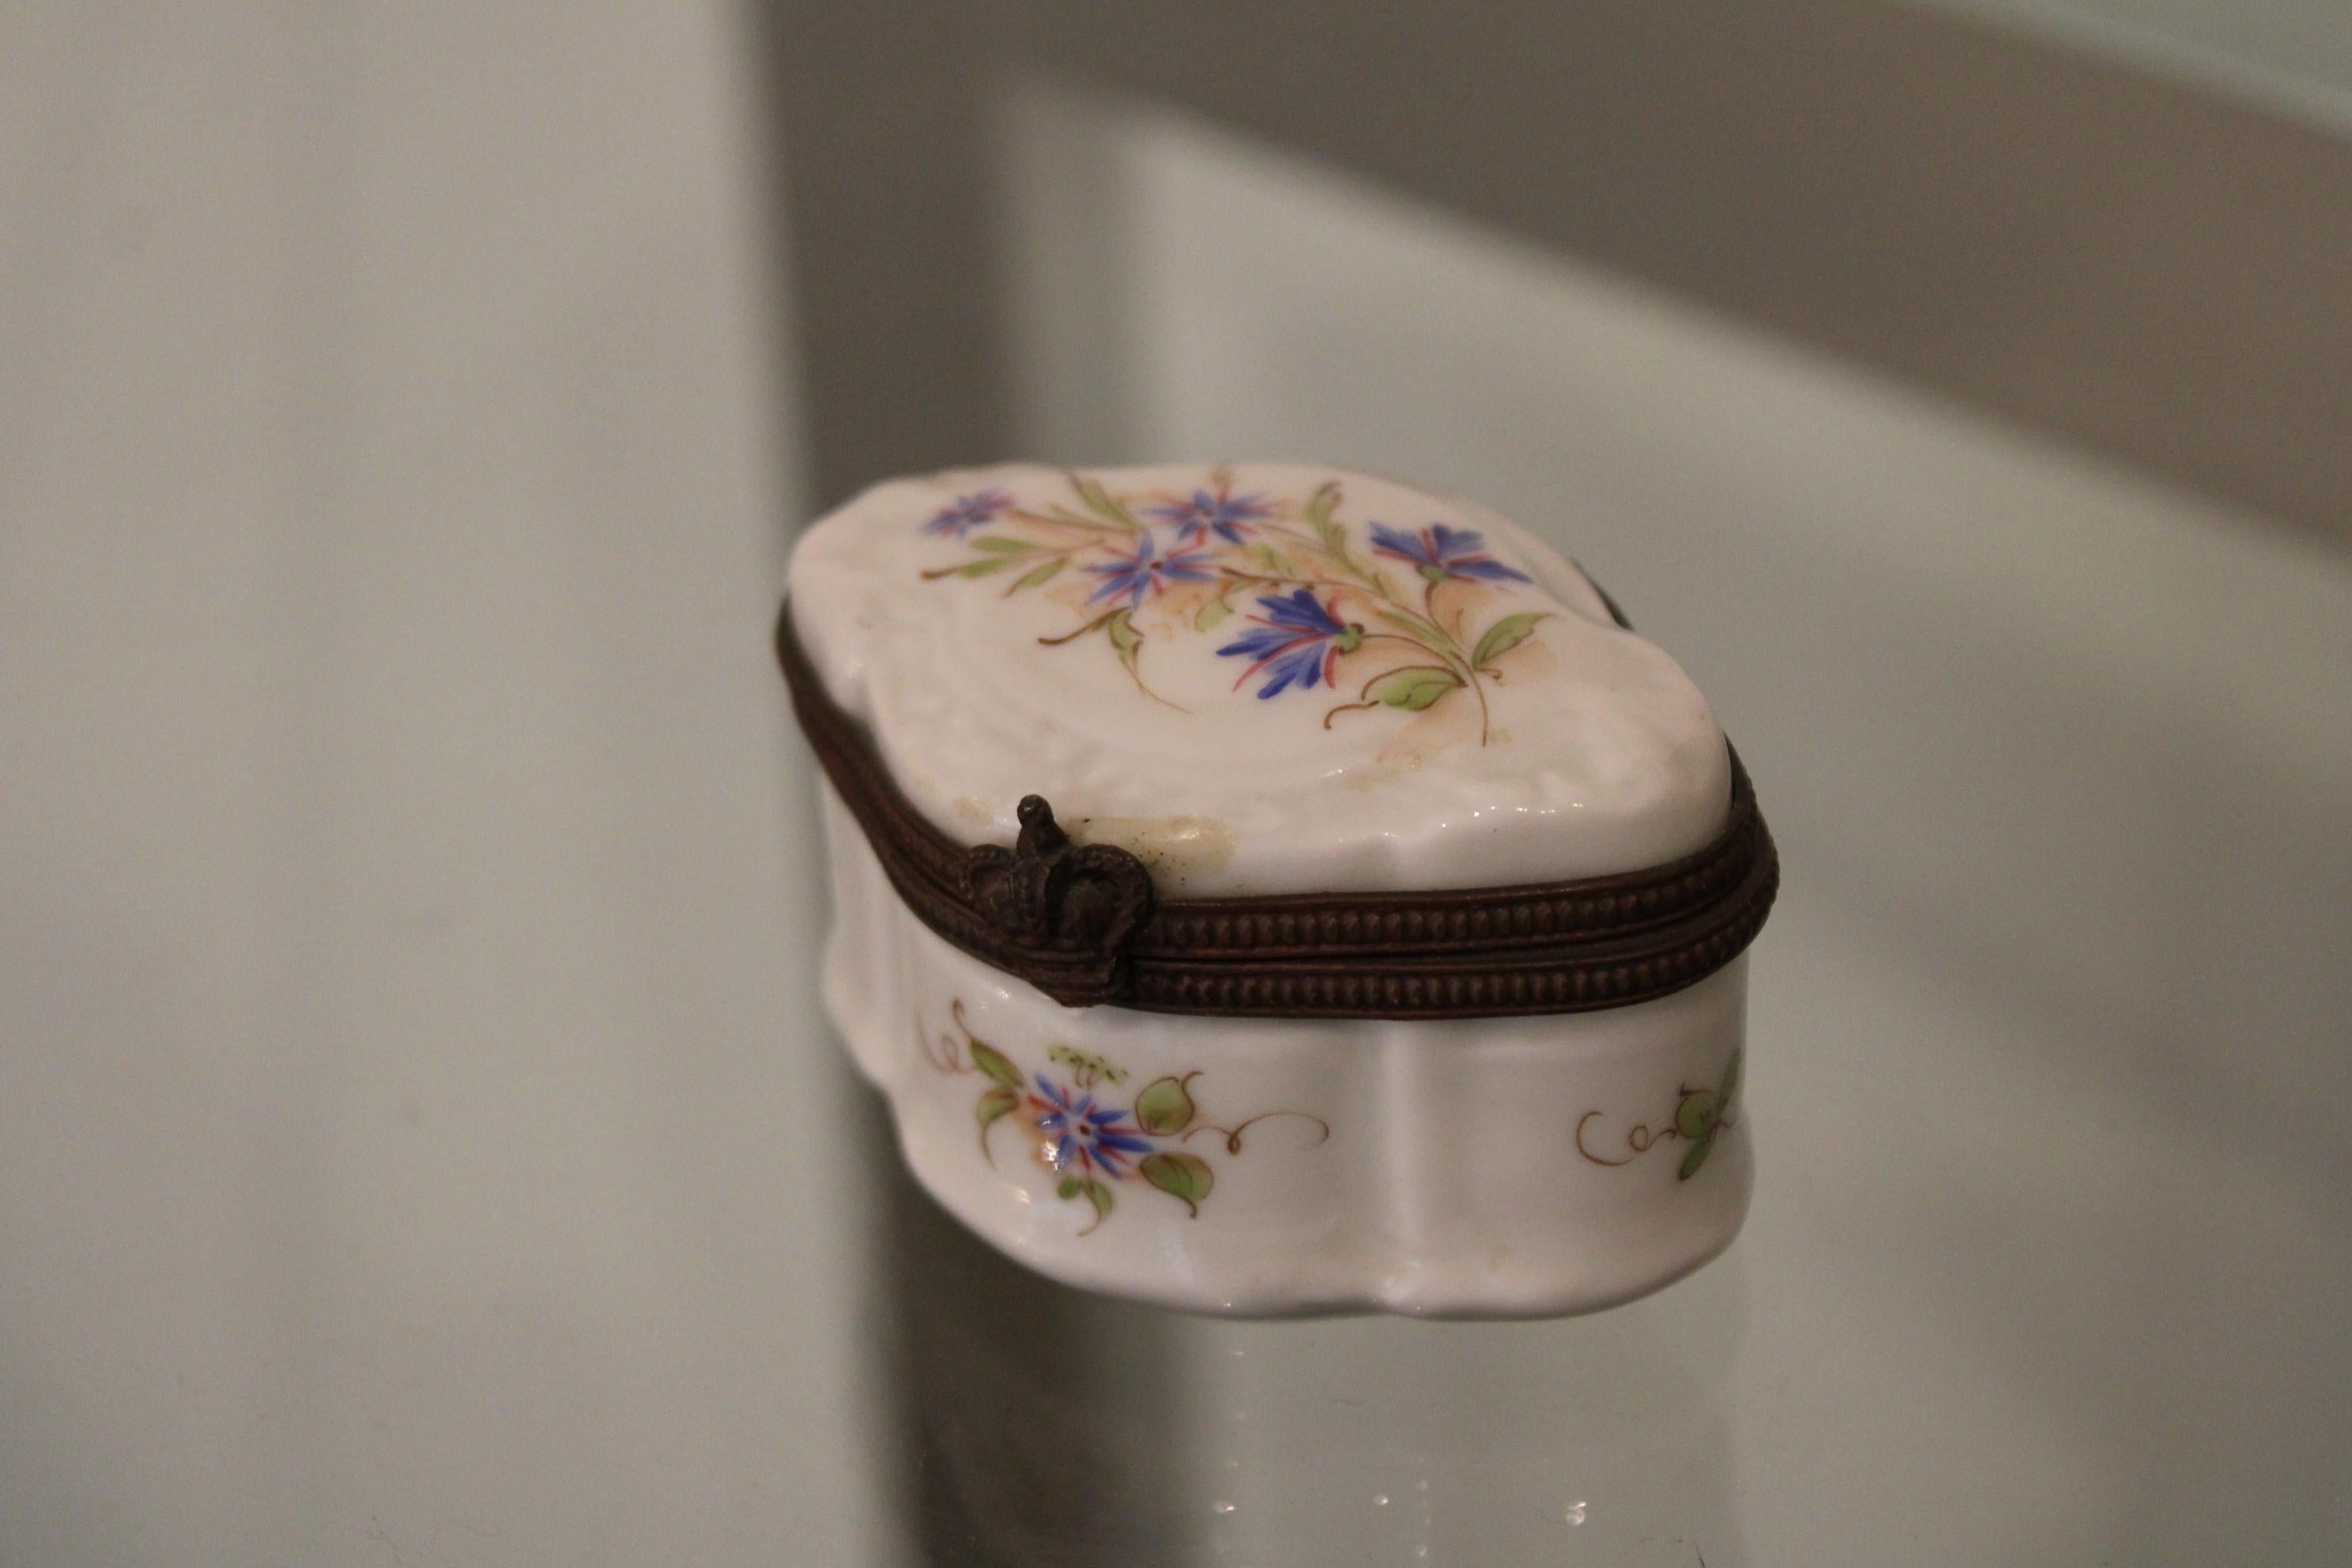 Small porcelain box.
Flower polychrome decor.
Mark under the base.